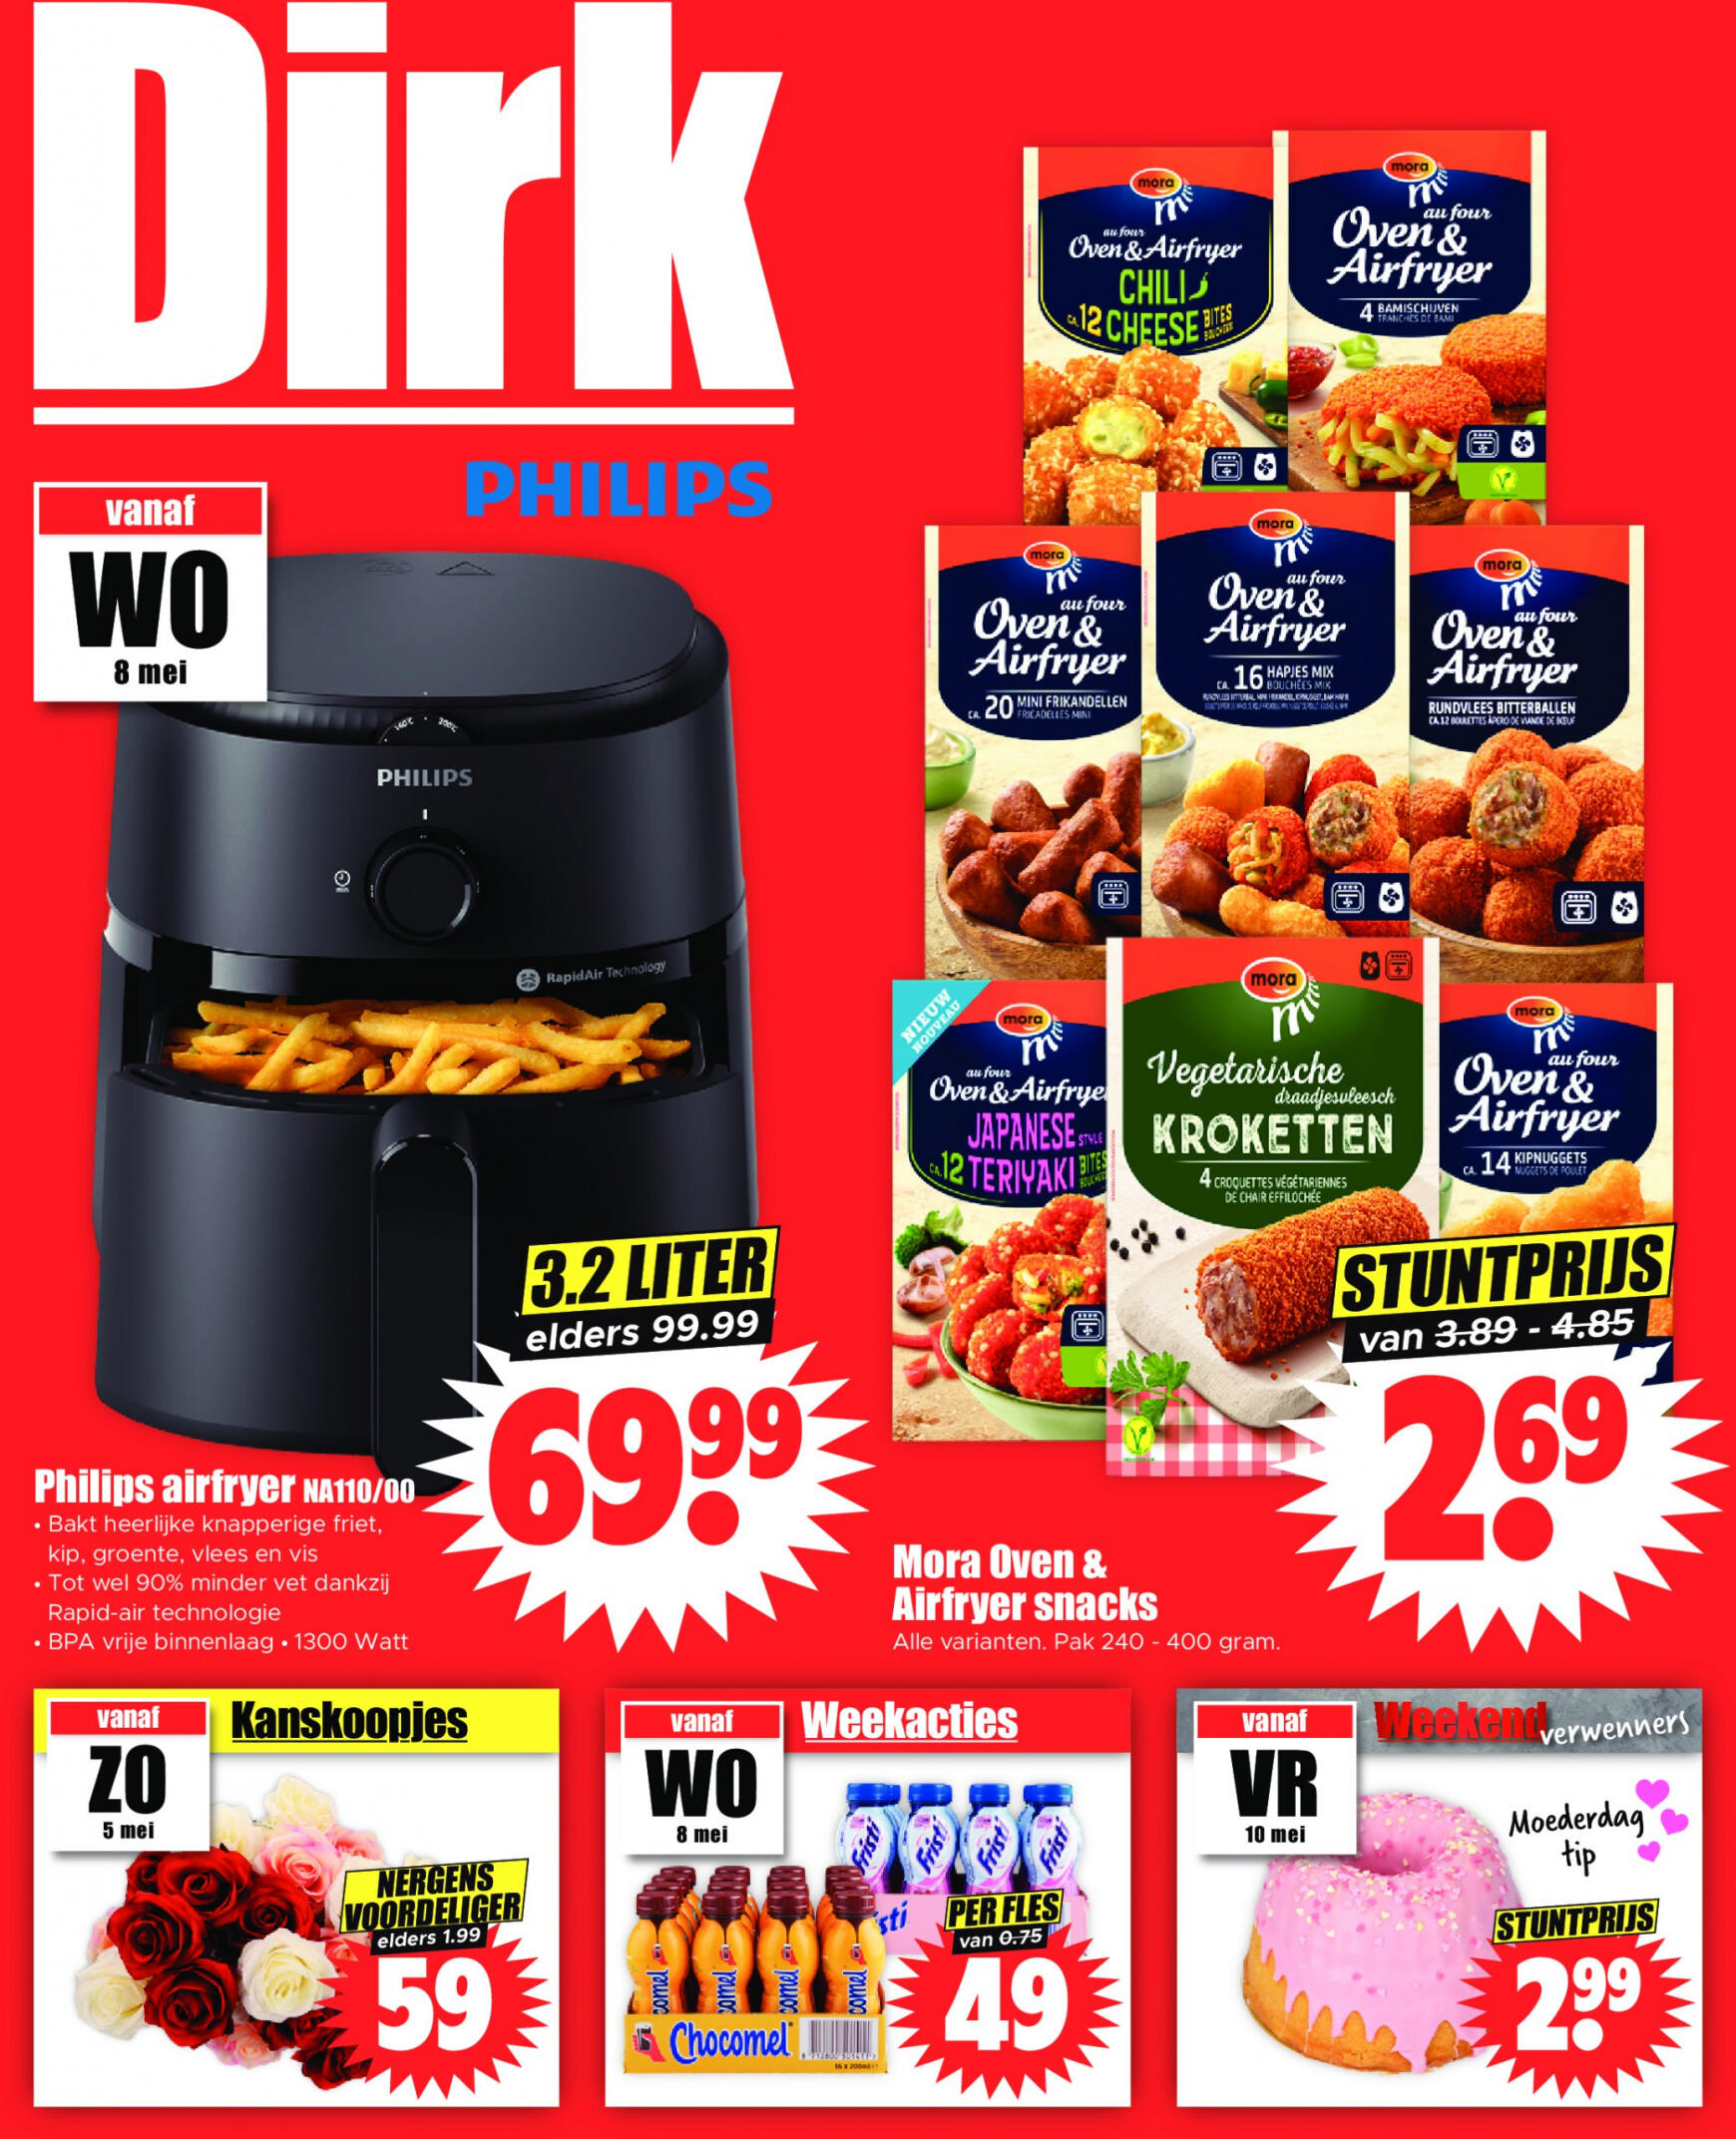 dirk - Dirk folder huidig 08.05. - 14.05. - page: 1